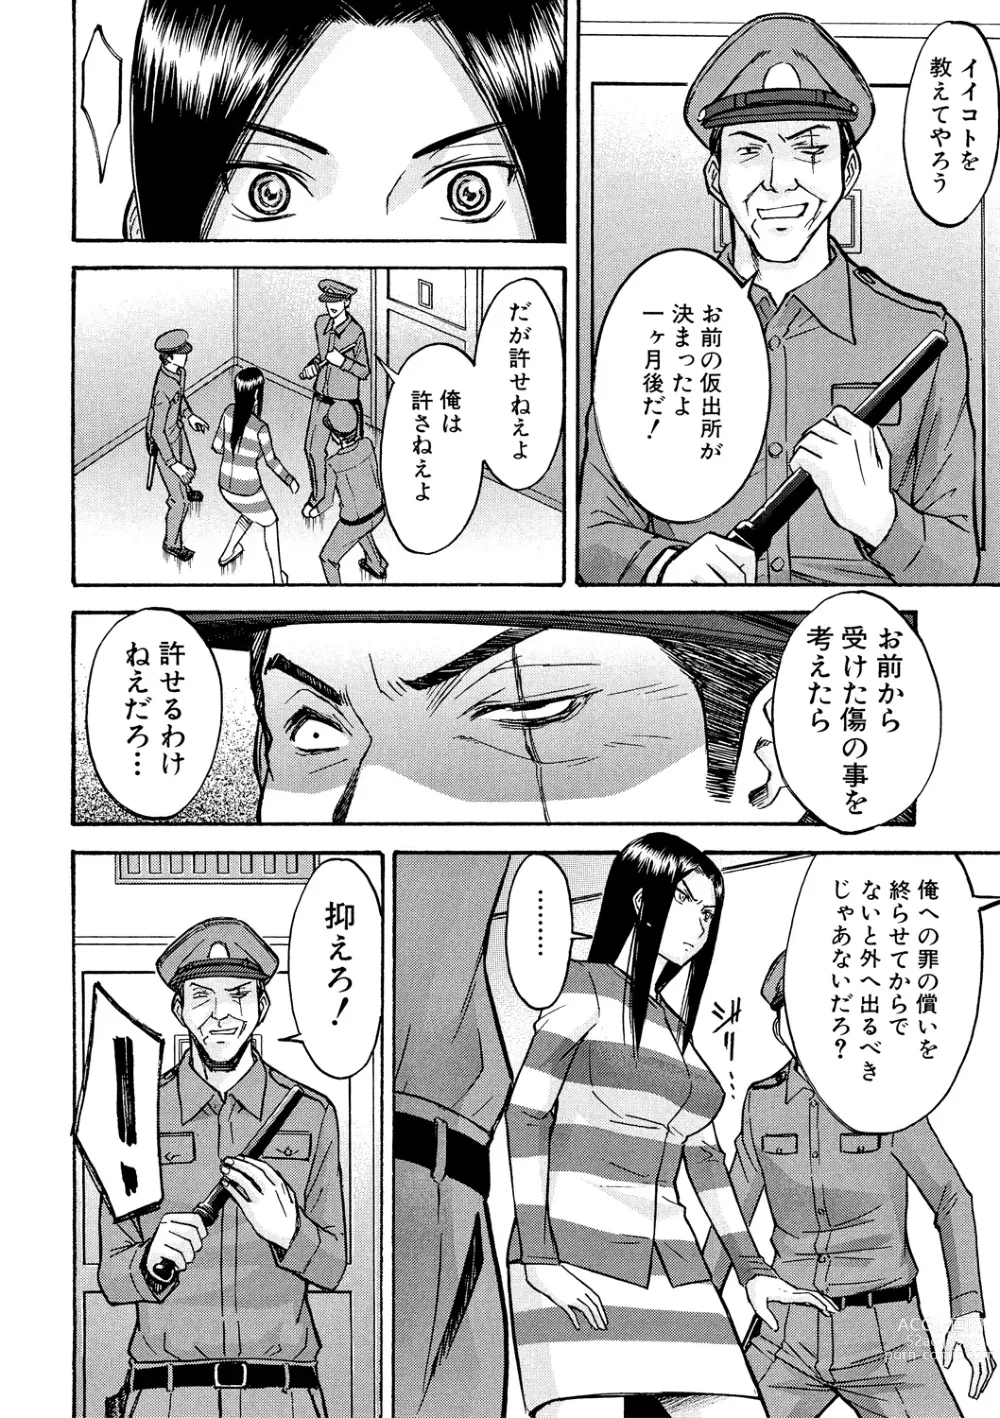 Page 9 of manga Camellia